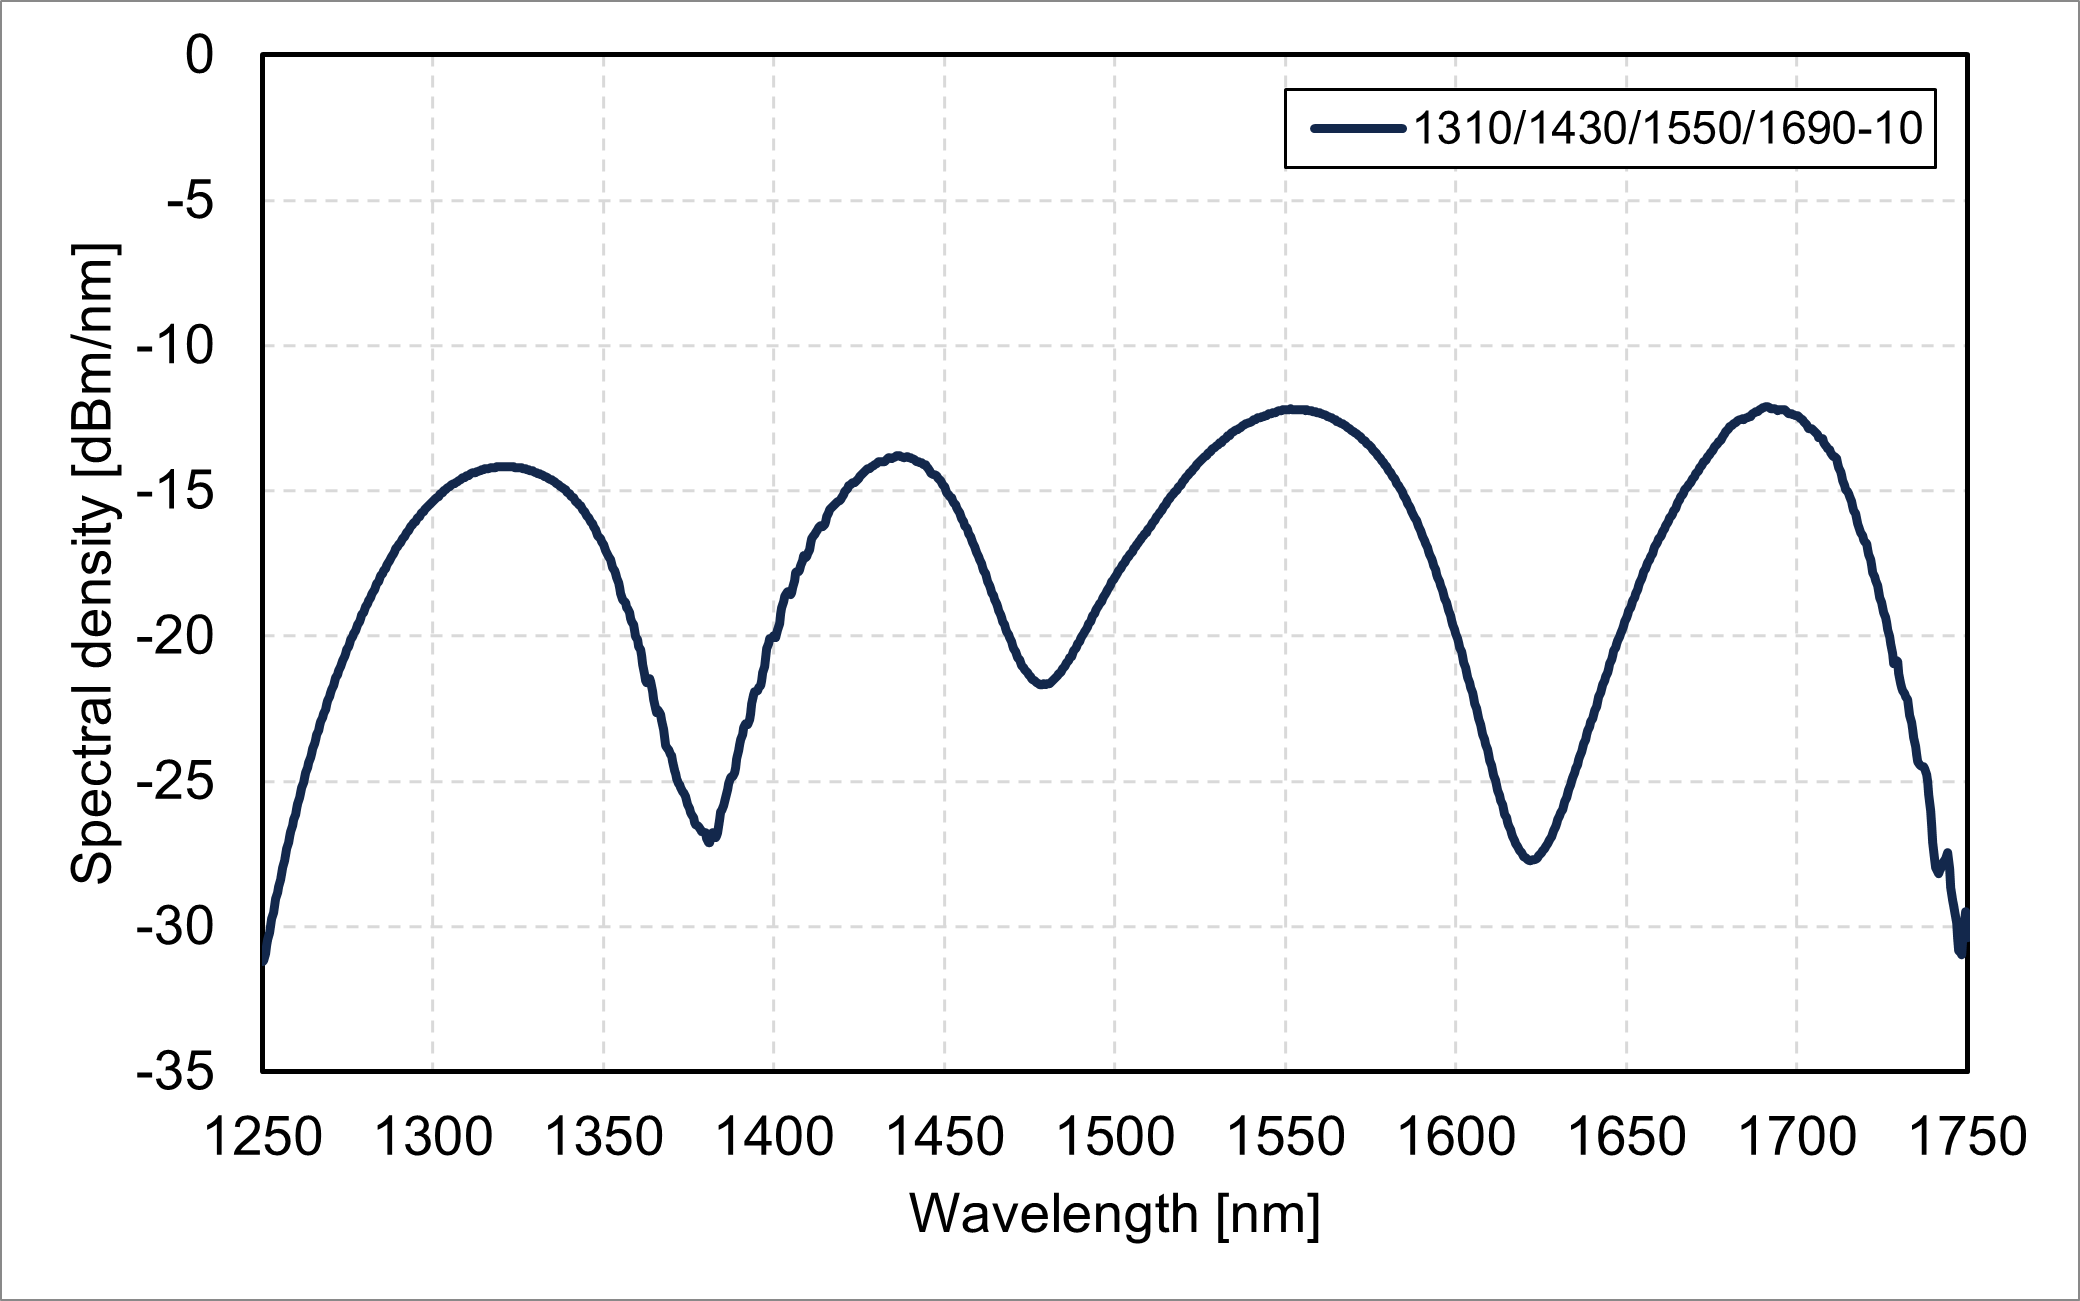 Spectral density vs. wavelength (1310/1430/1550/1690-10)